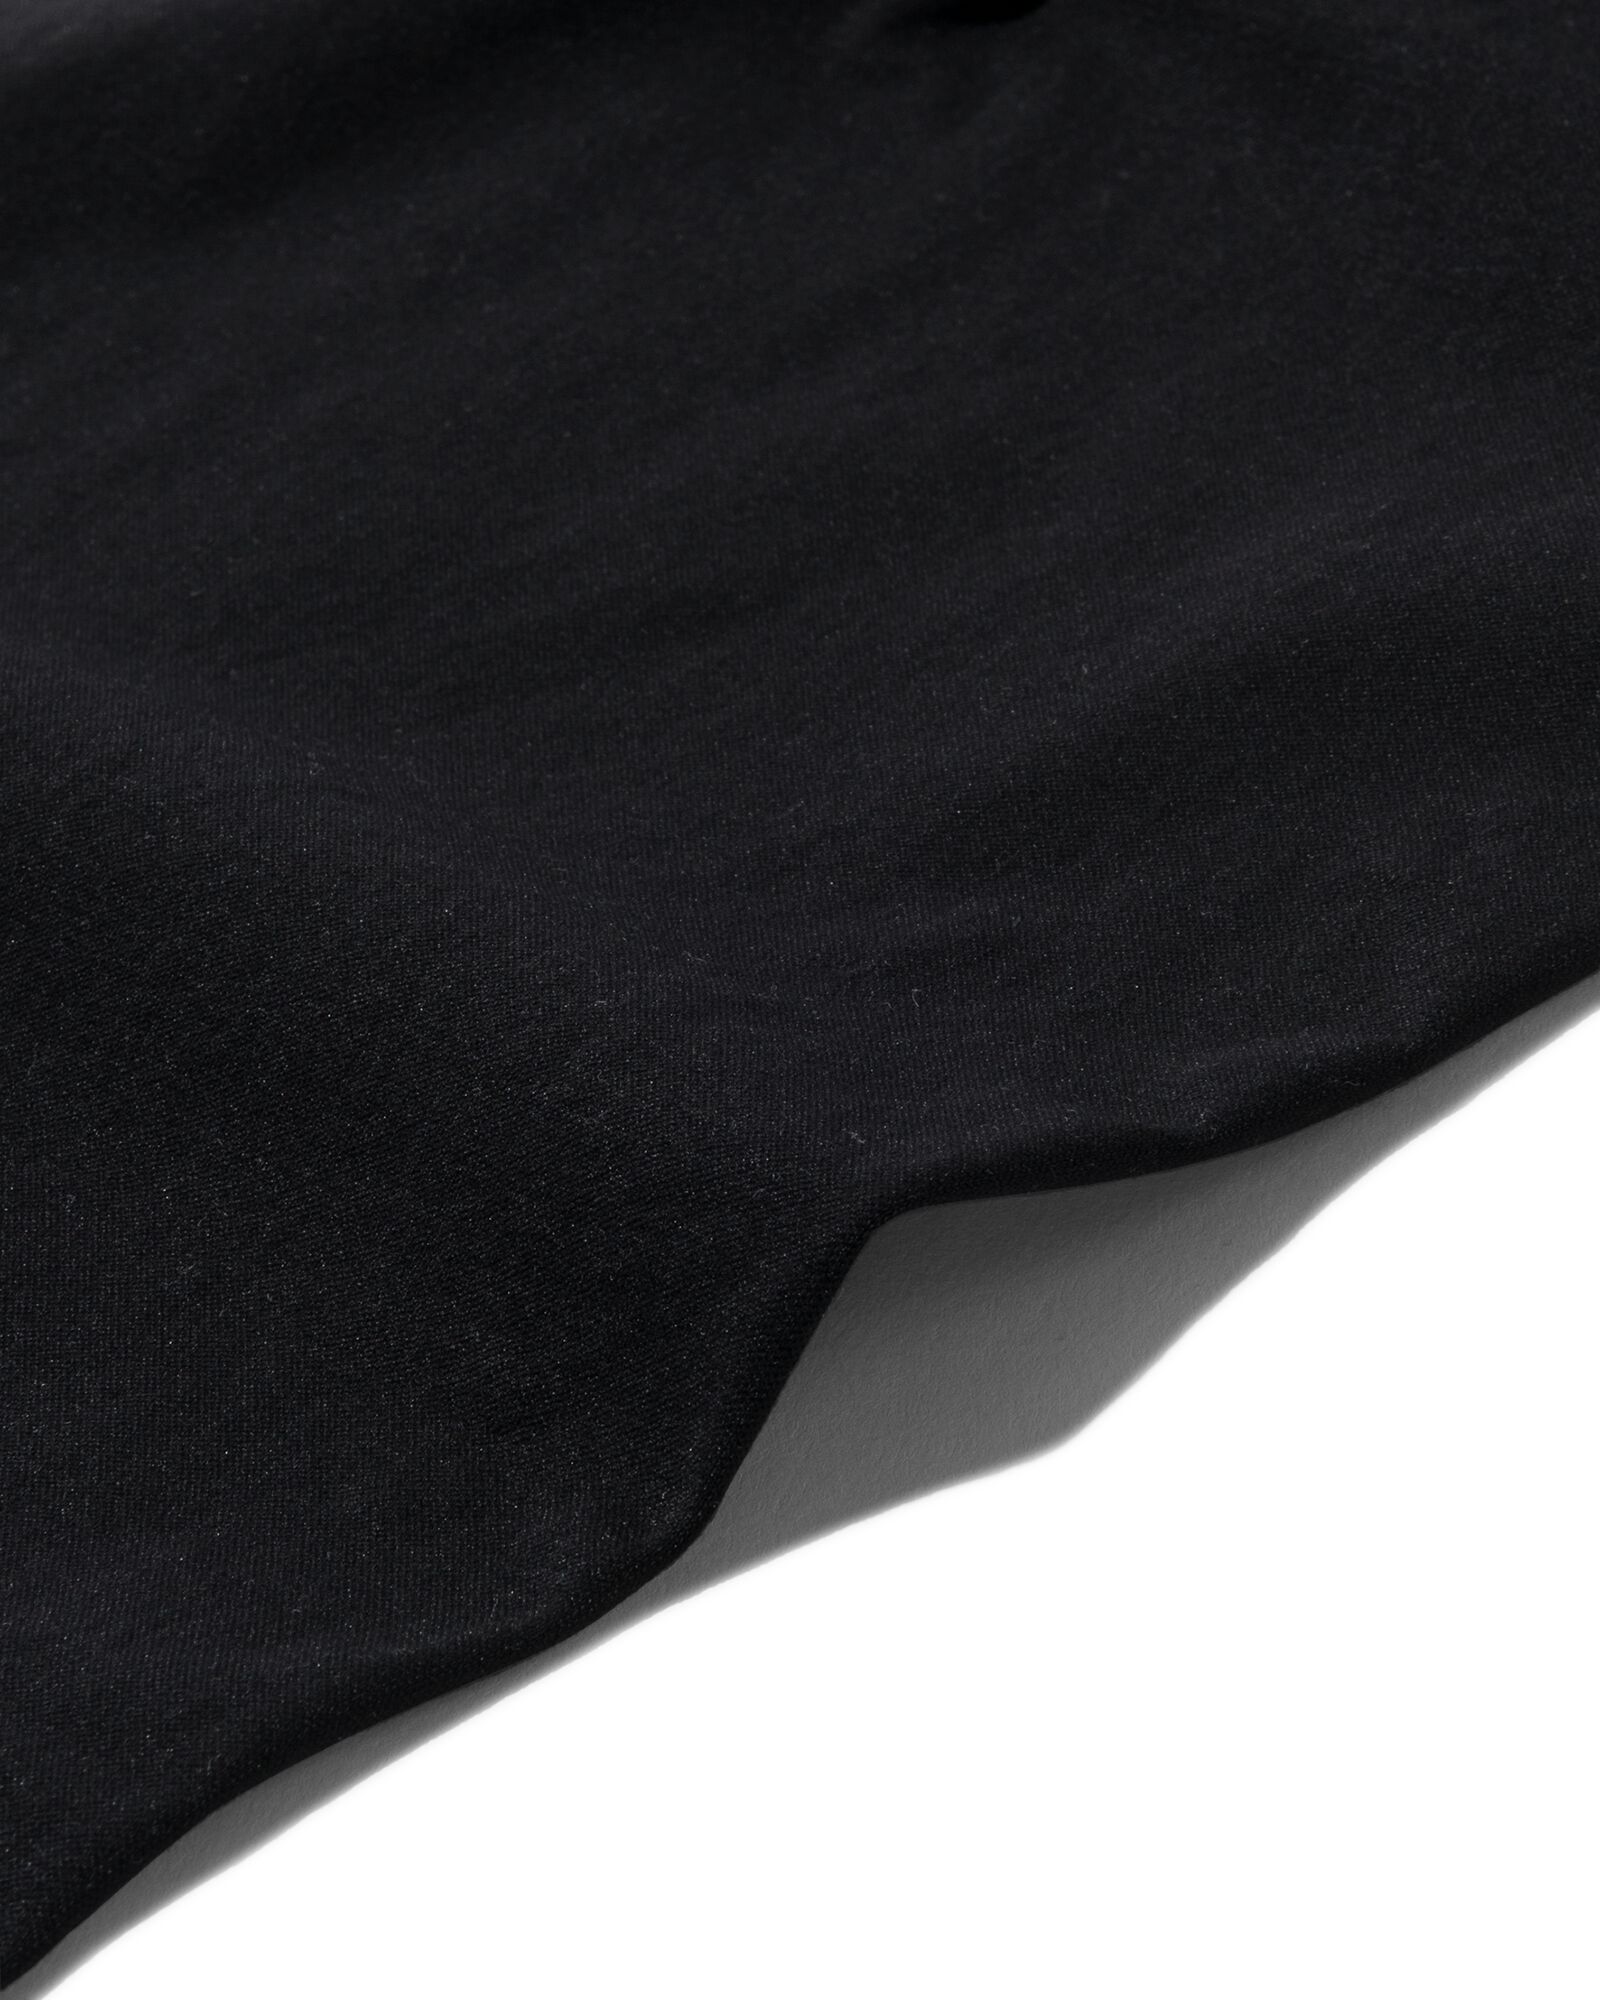 sterk corrigerend hemd zwart - 1000019532 - HEMA